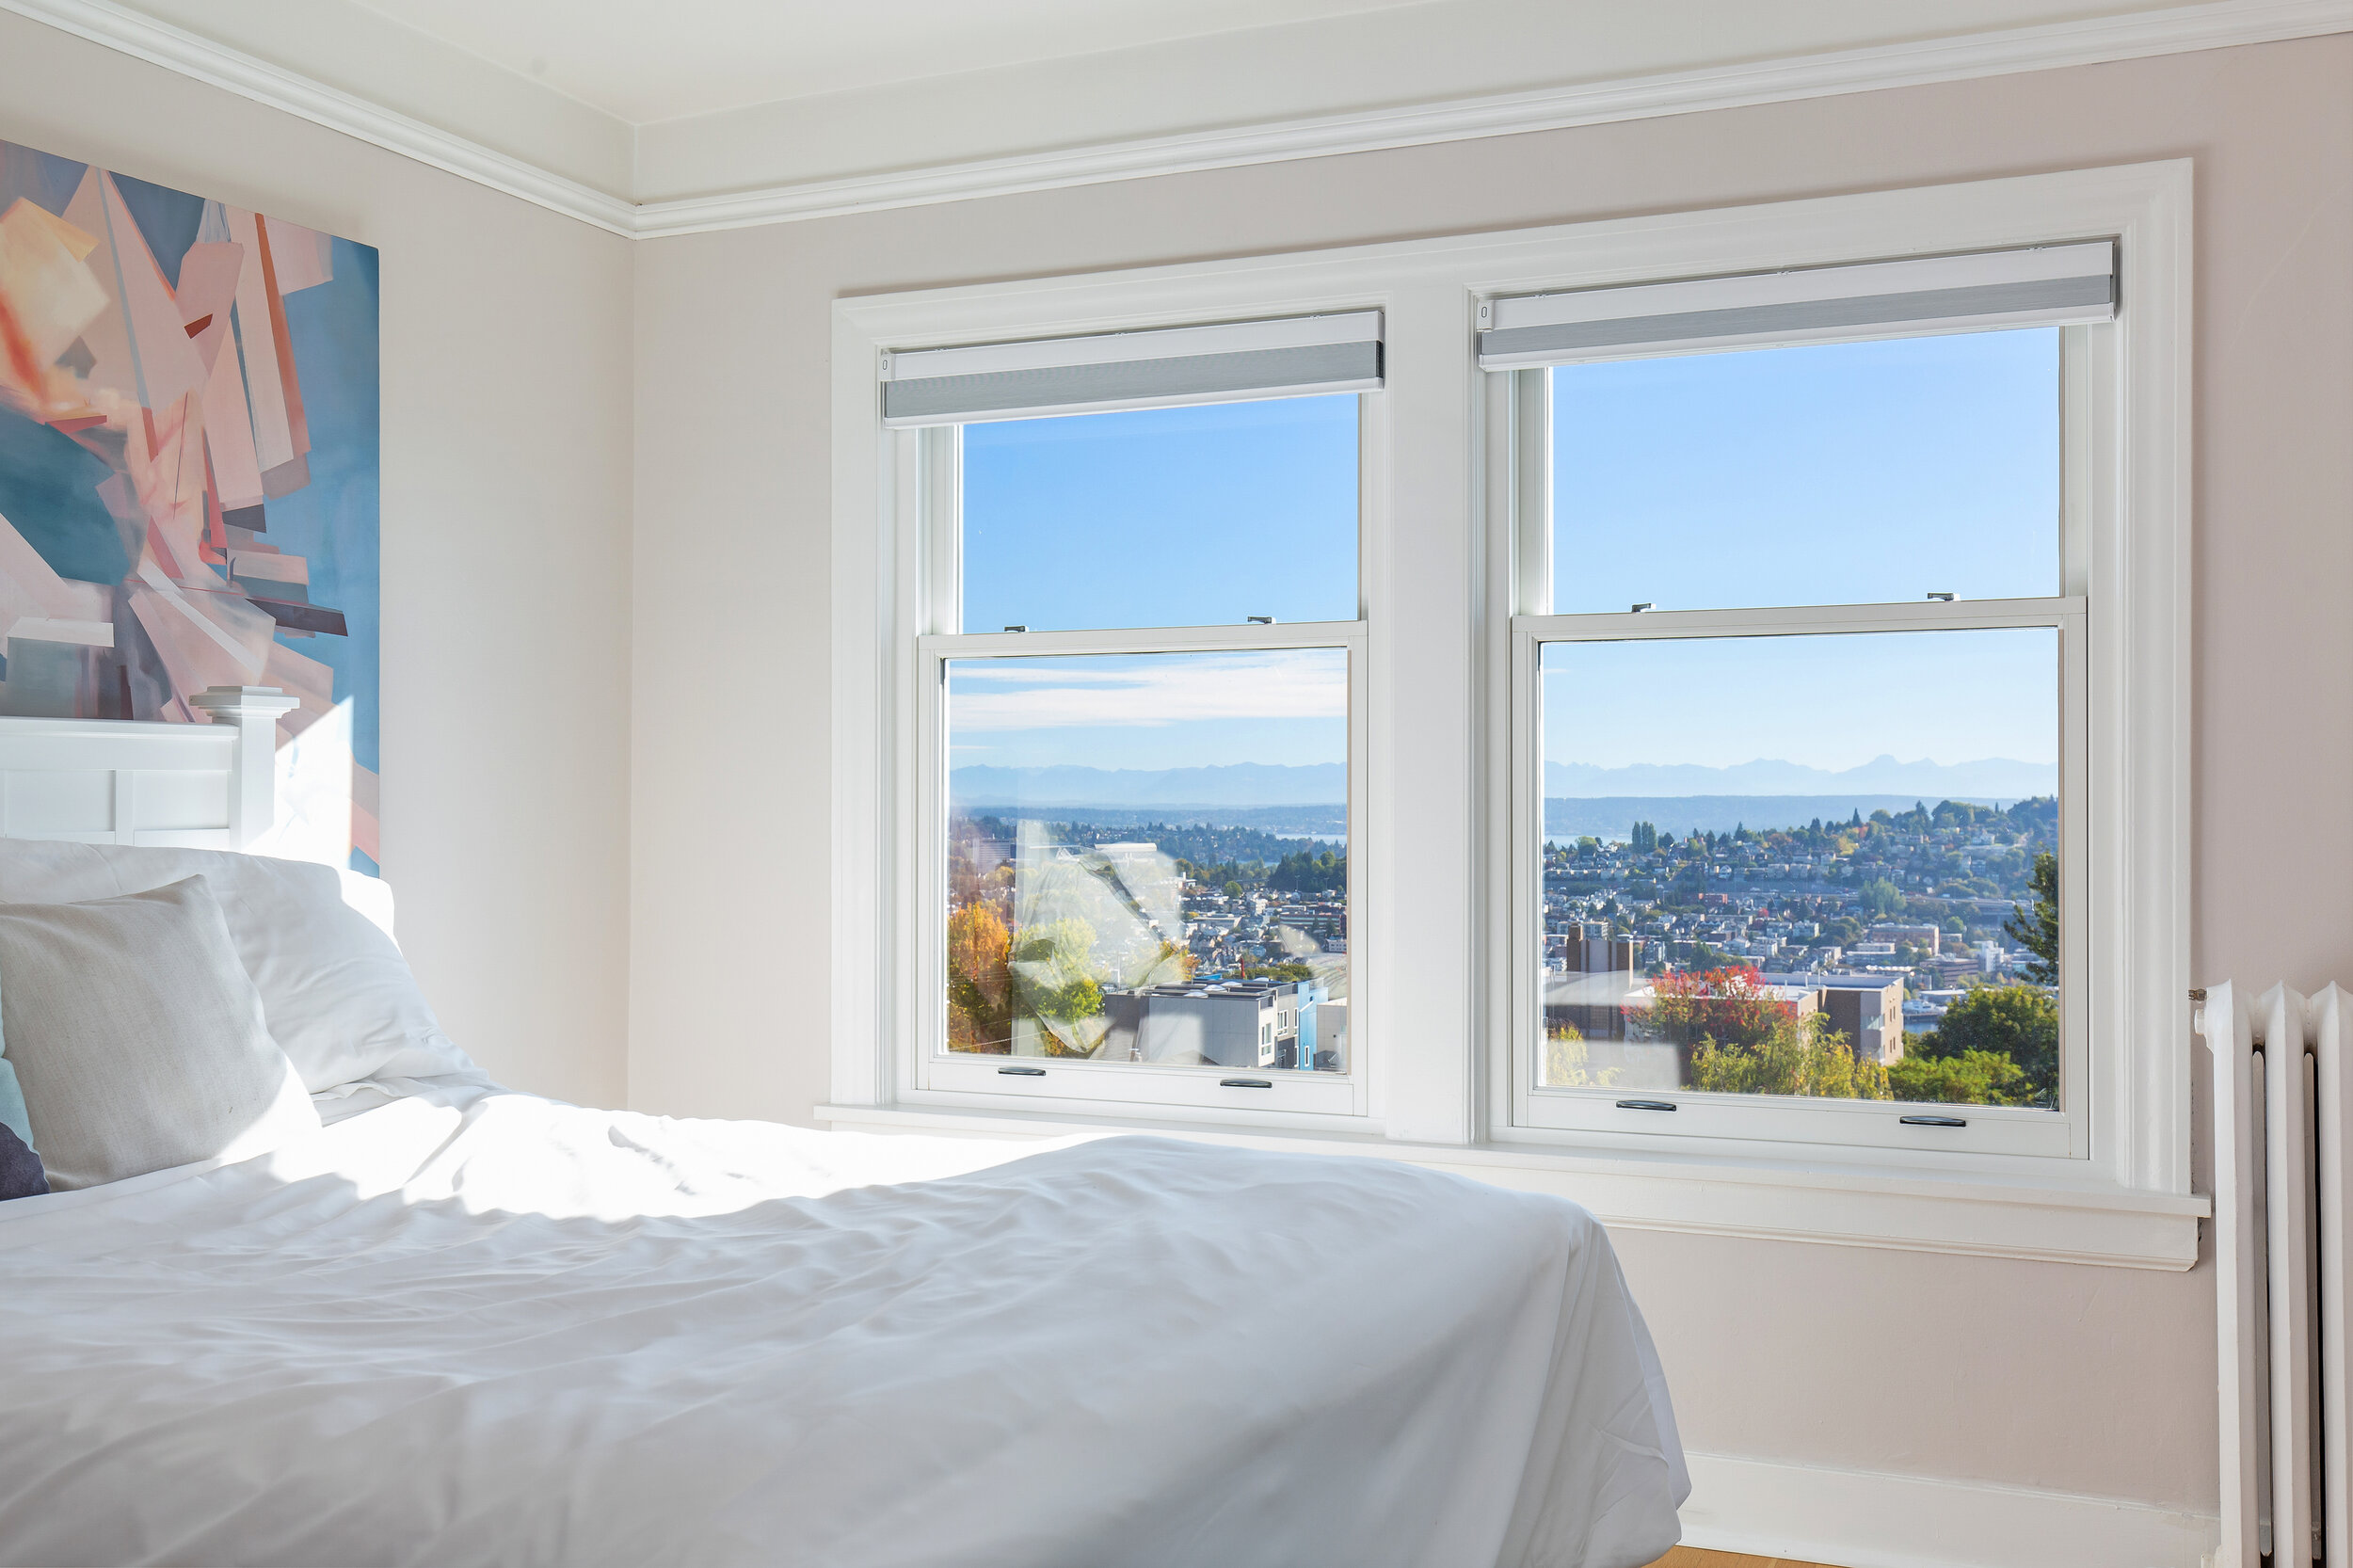  image description: interior bedroom with queen bed, and windows 